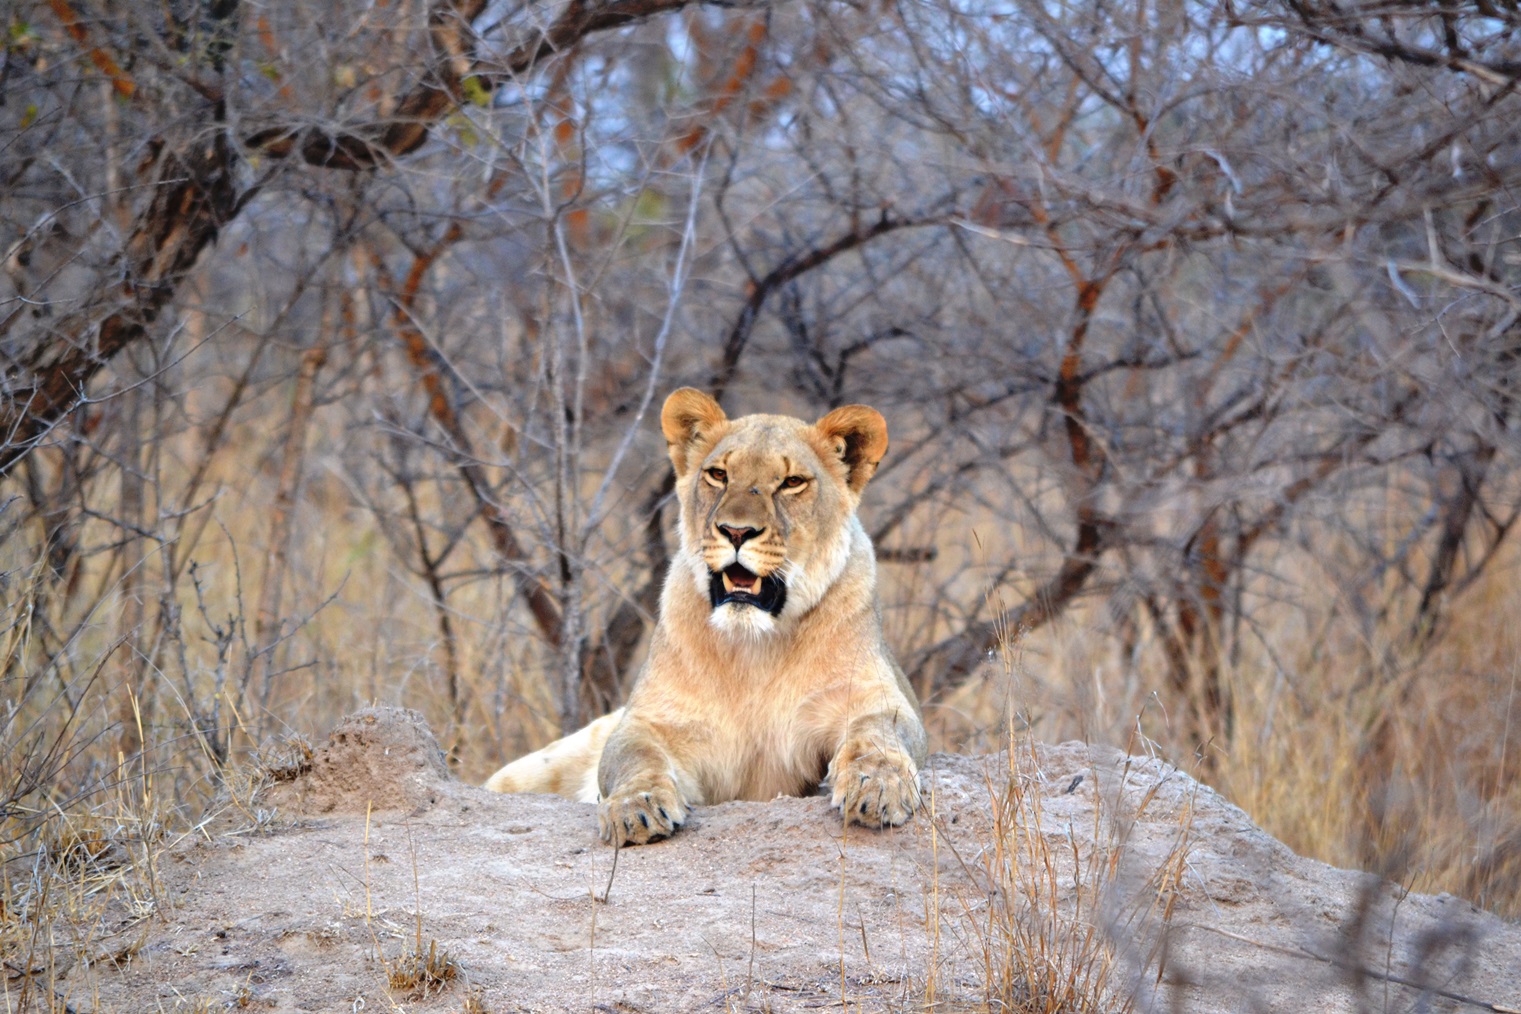  Lions in the release phase of ALERT's reintroduction program.&nbsp;© Emma Dunston 